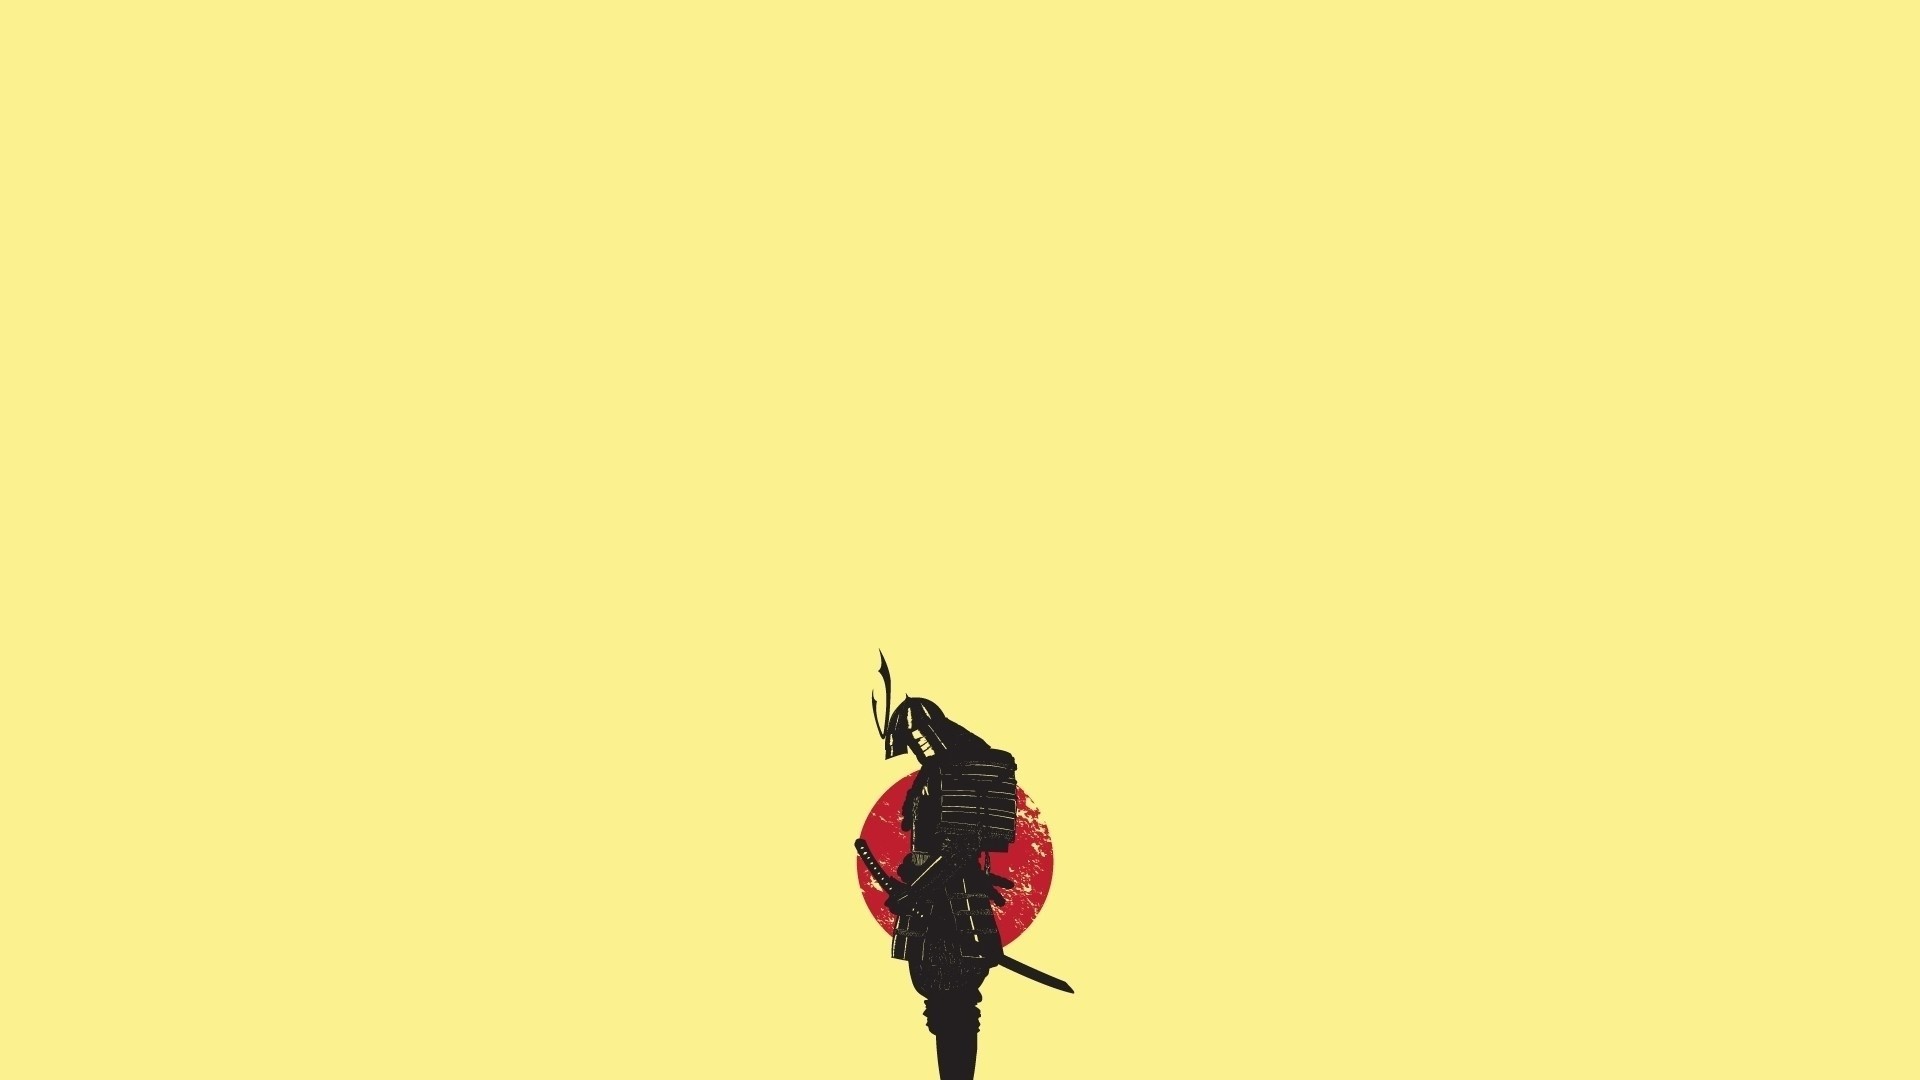 Abstract minimalistic samurai 1920×1080 wallpaperhi.com